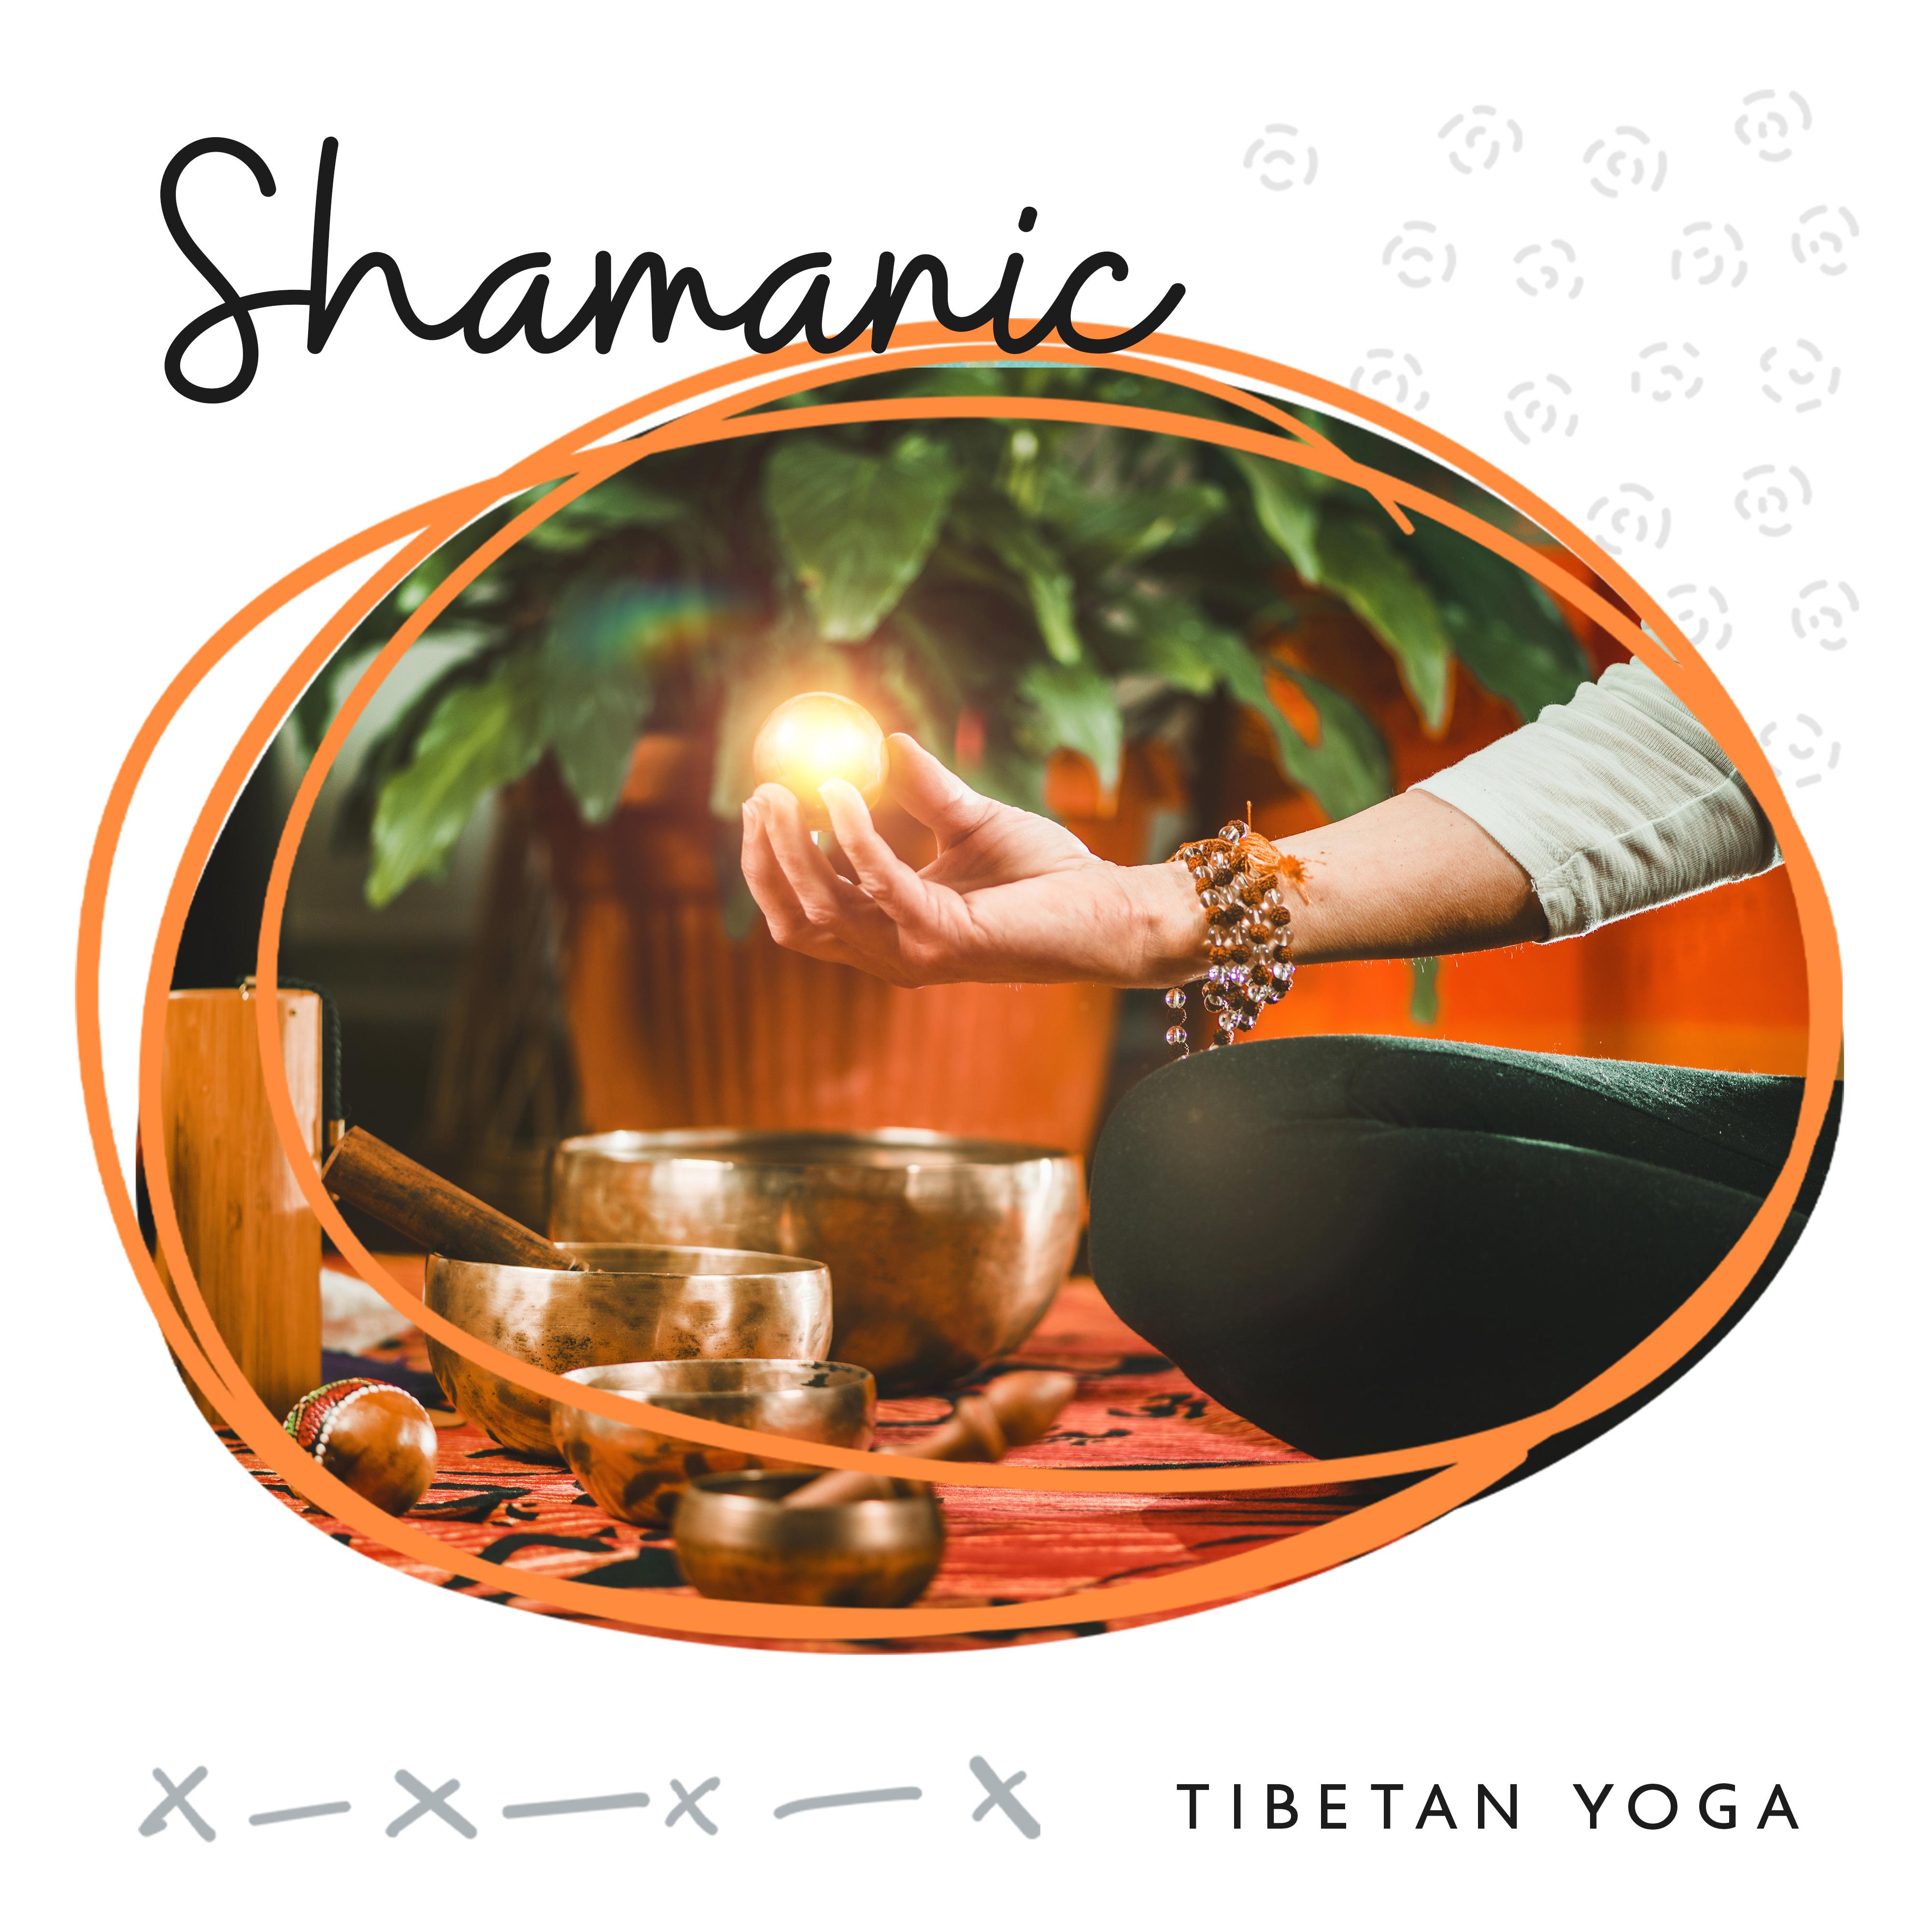 Shamanic Tibetan Yoga (Music Background for Buddhist Meditation and Yoga Practices)